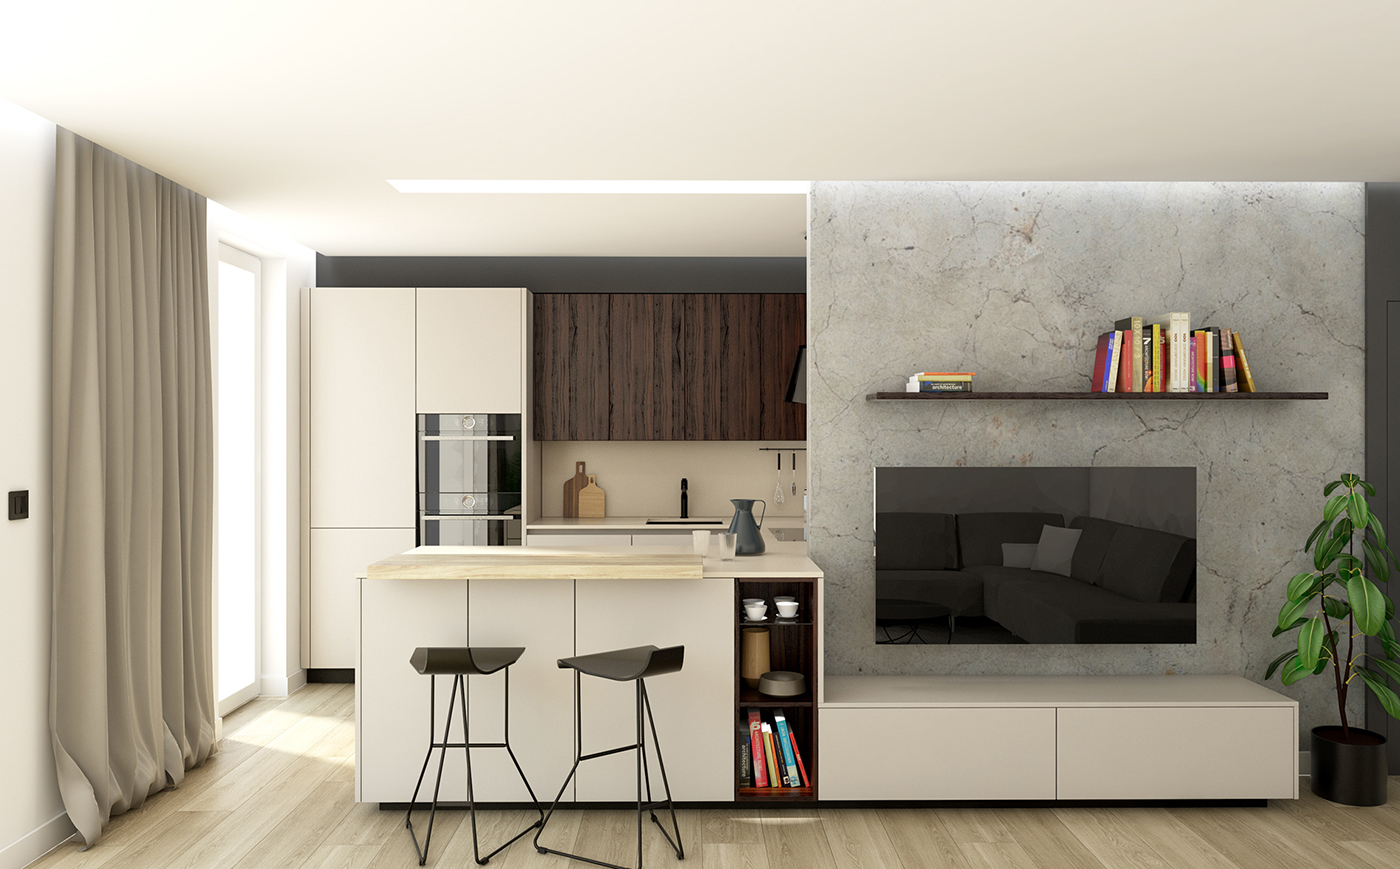 design kitchen kitchen design architecture Interior interior design  cosy home living cooking